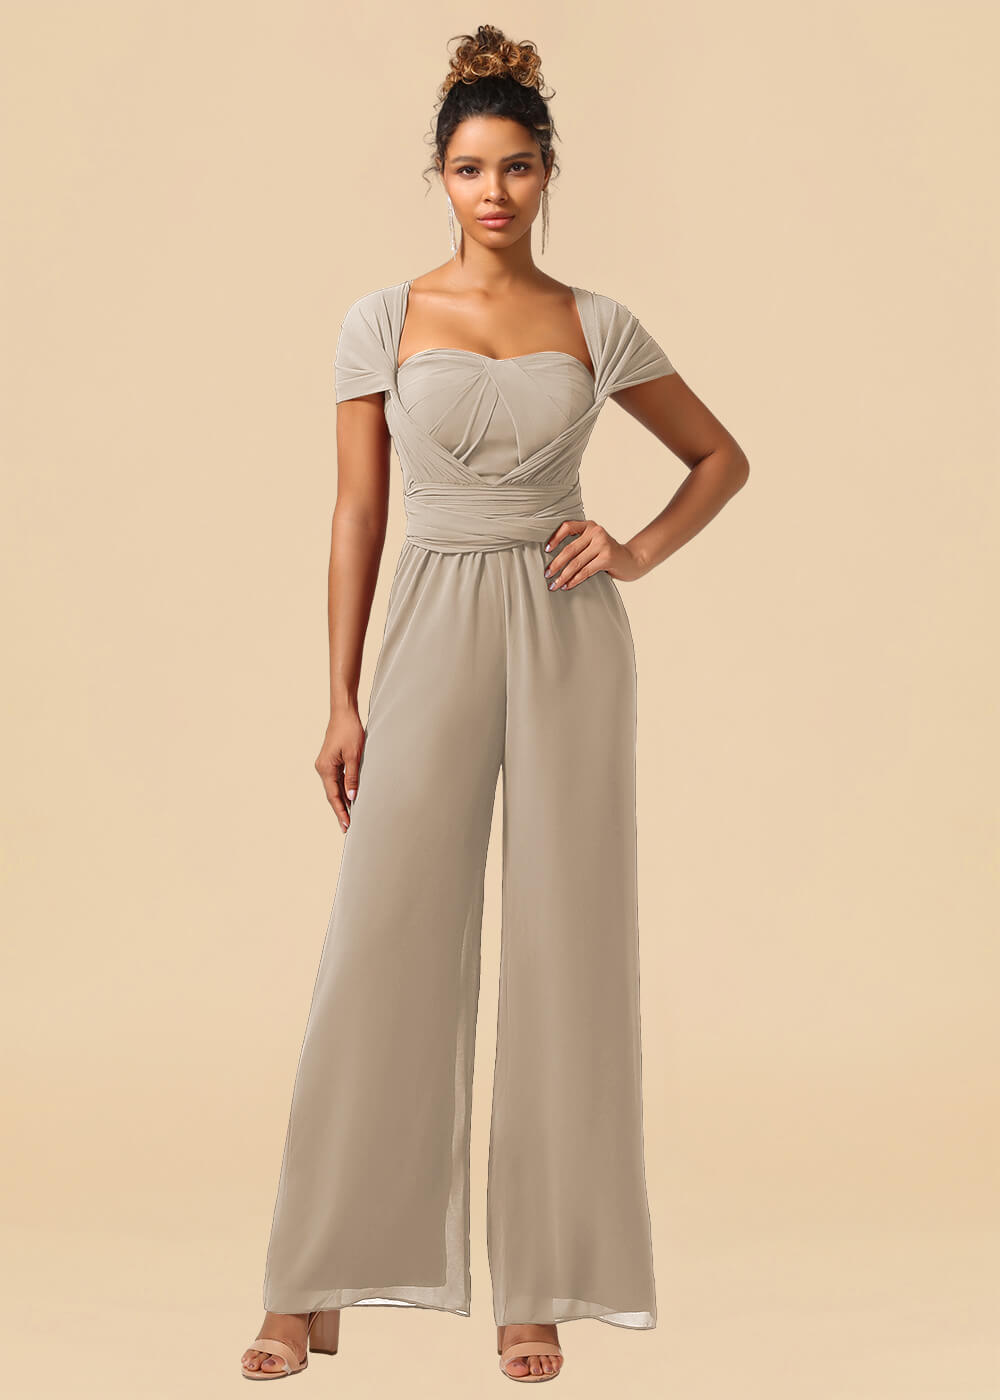 Chiffon Convertible Floor Length Jumpsuit Bridesmaid Dress